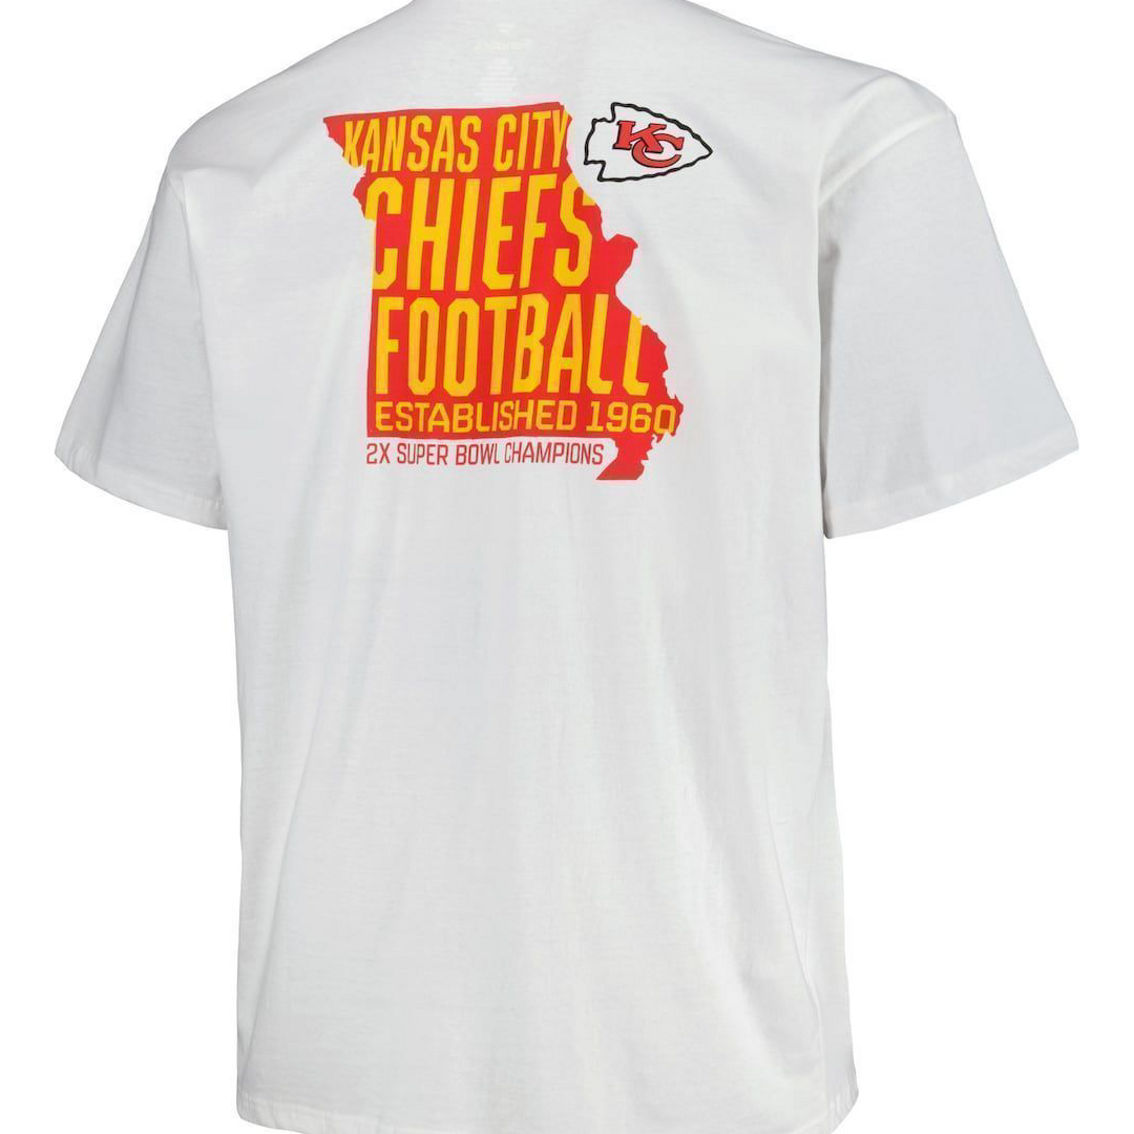 Fanatics Branded Men's White Kansas City Chiefs Big & Tall Hometown Collection Hot Shot T-Shirt - Image 4 of 4